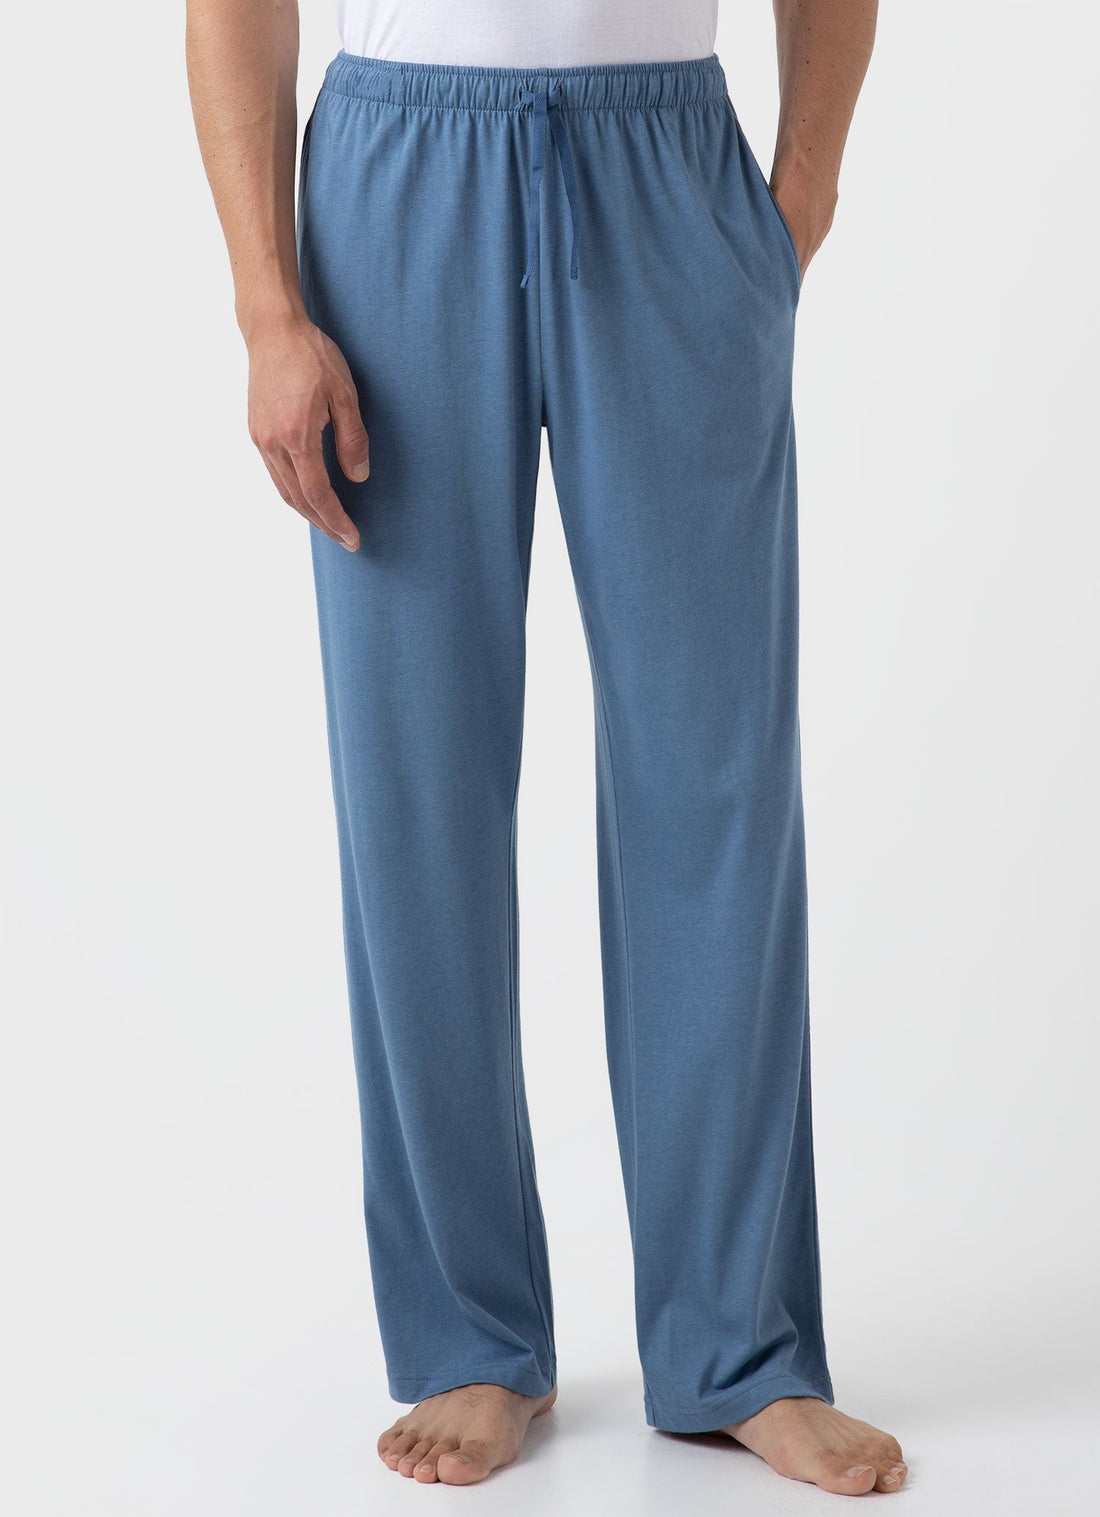 Modal Men's Loungewear lounge pants & pyjama bottoms